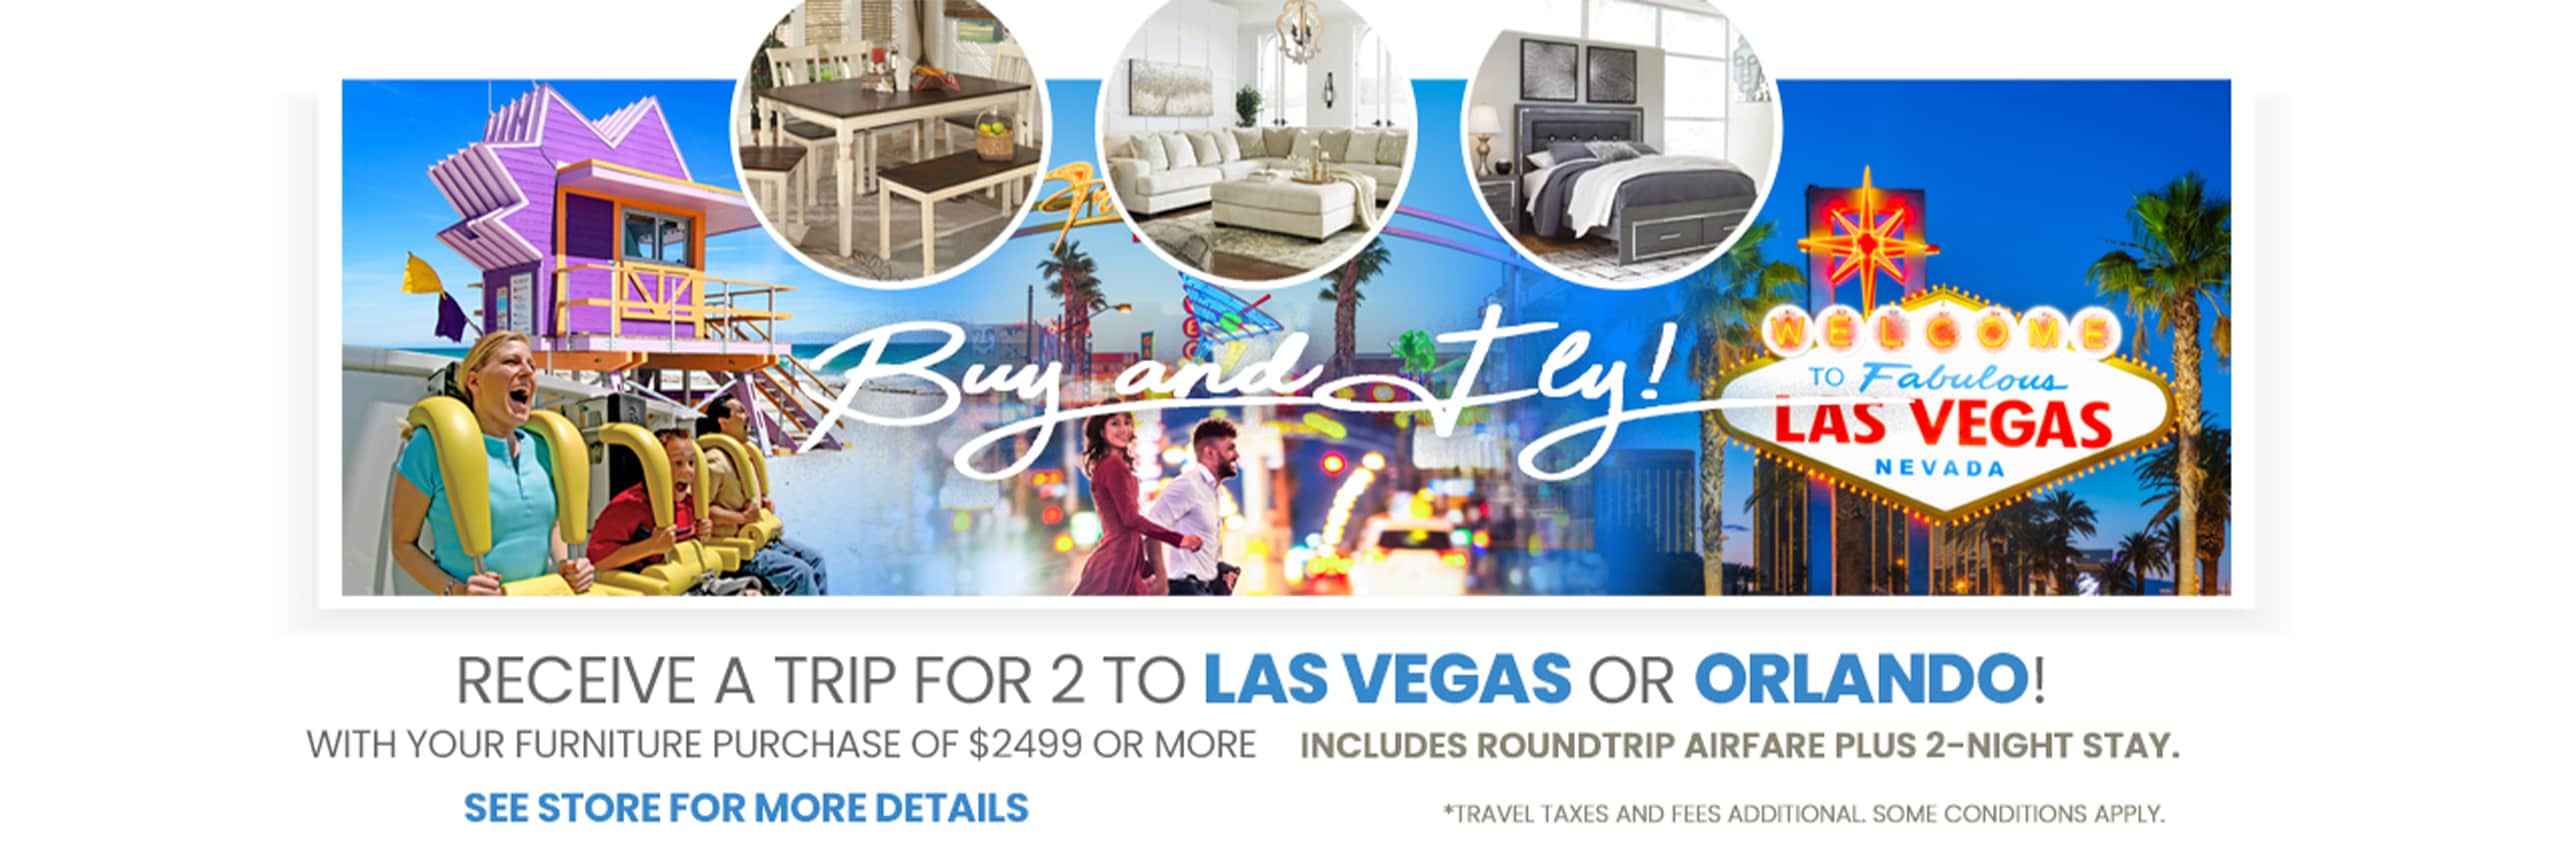 Receive a Trip to Las Vegas or Orlando!